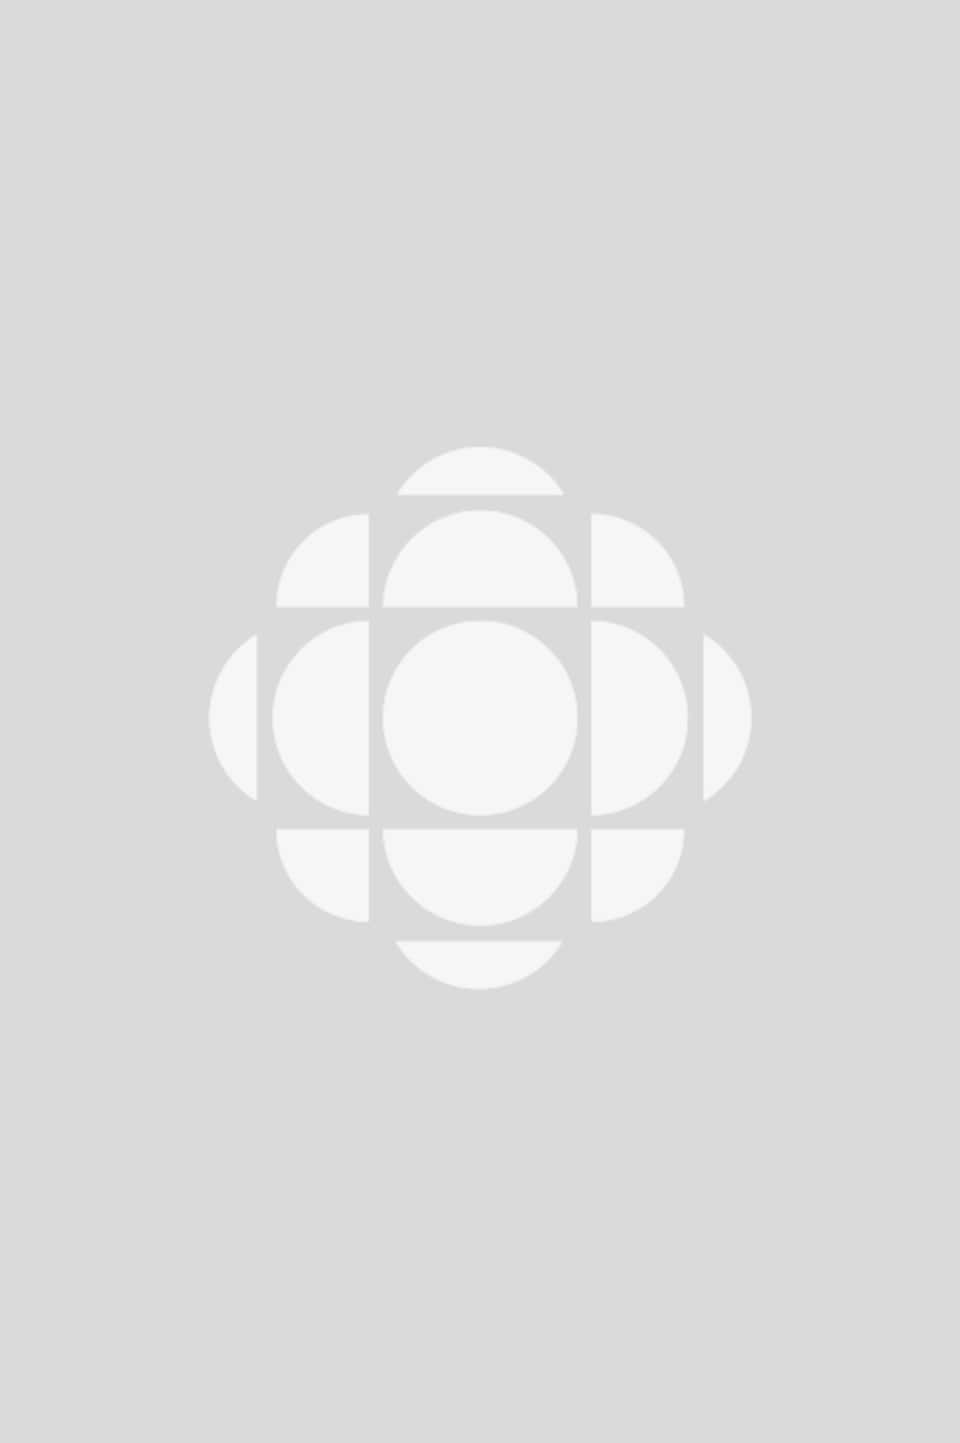 Logo de Radio-Canada centré sur un fond blanc